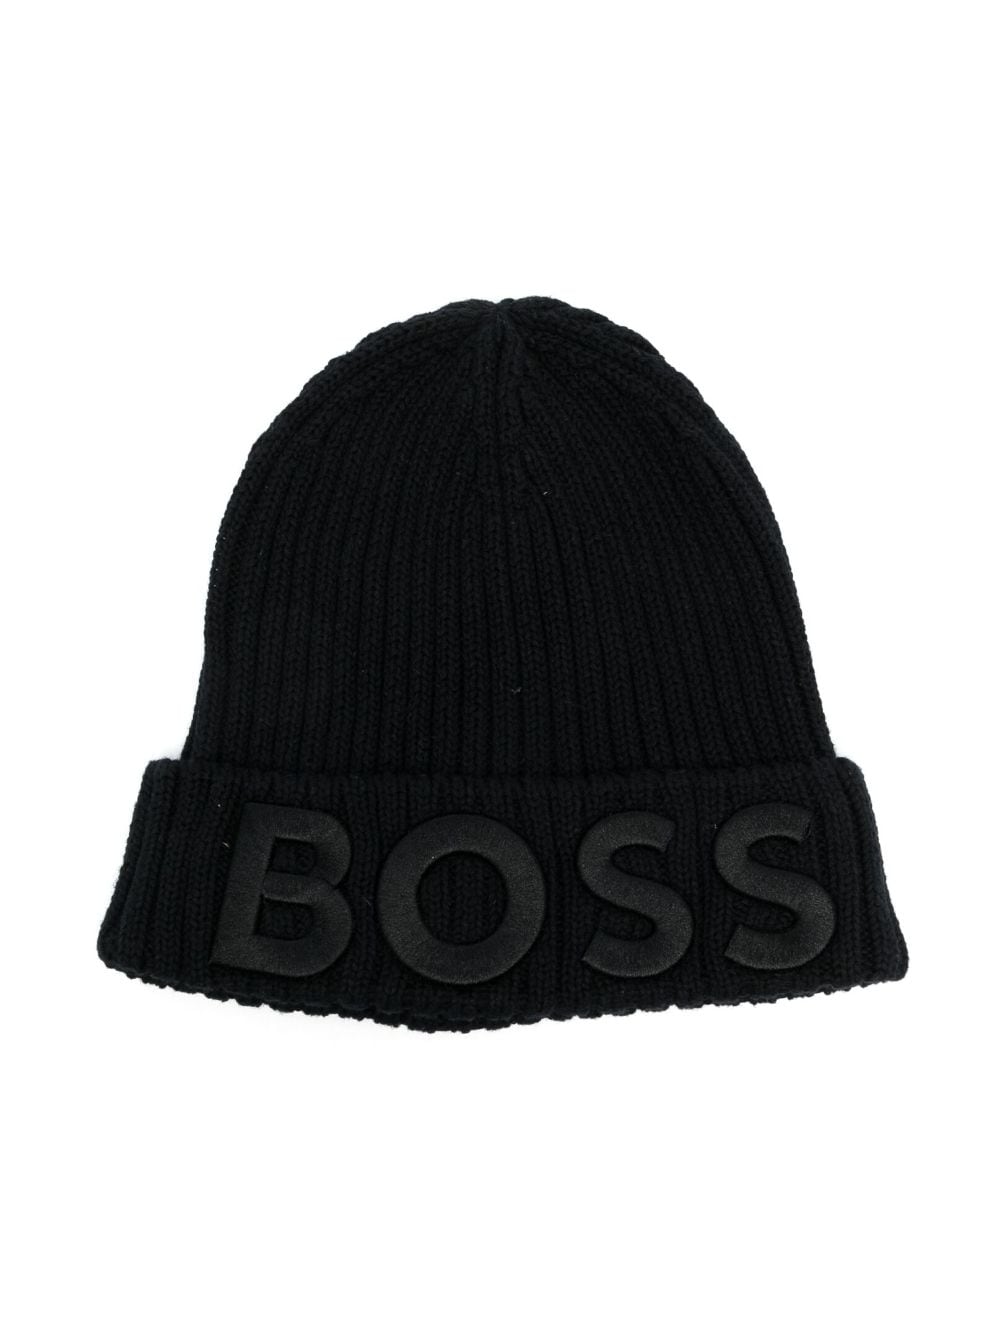 BOSS Kidswear embroidered-logo beanie hat - Black